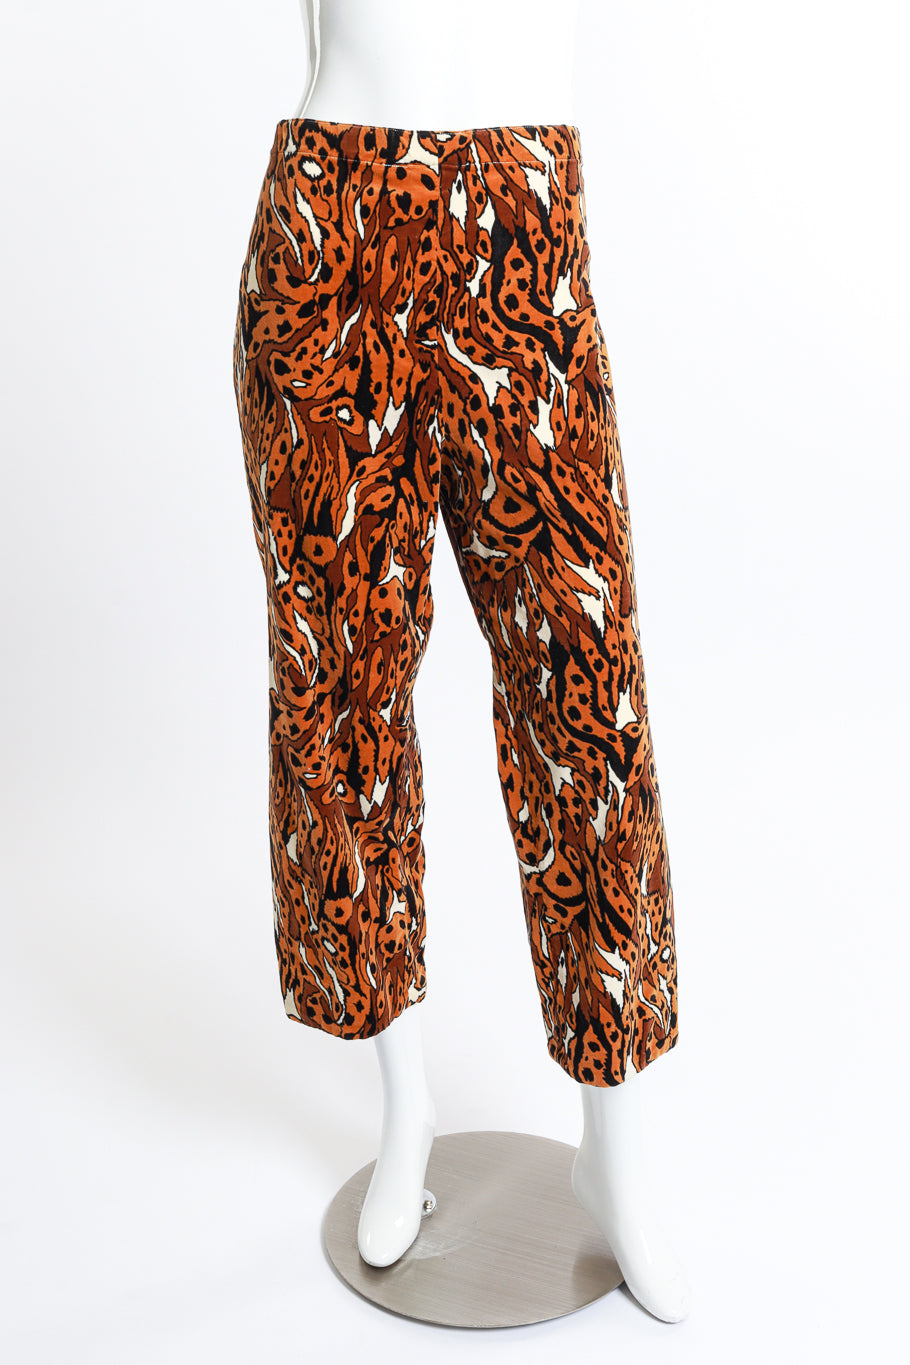 Vintage Young Edwardian Abstract Leopard Velvet Jacket & Pants suit front view of pants as worn on mannequin @RECESS LA